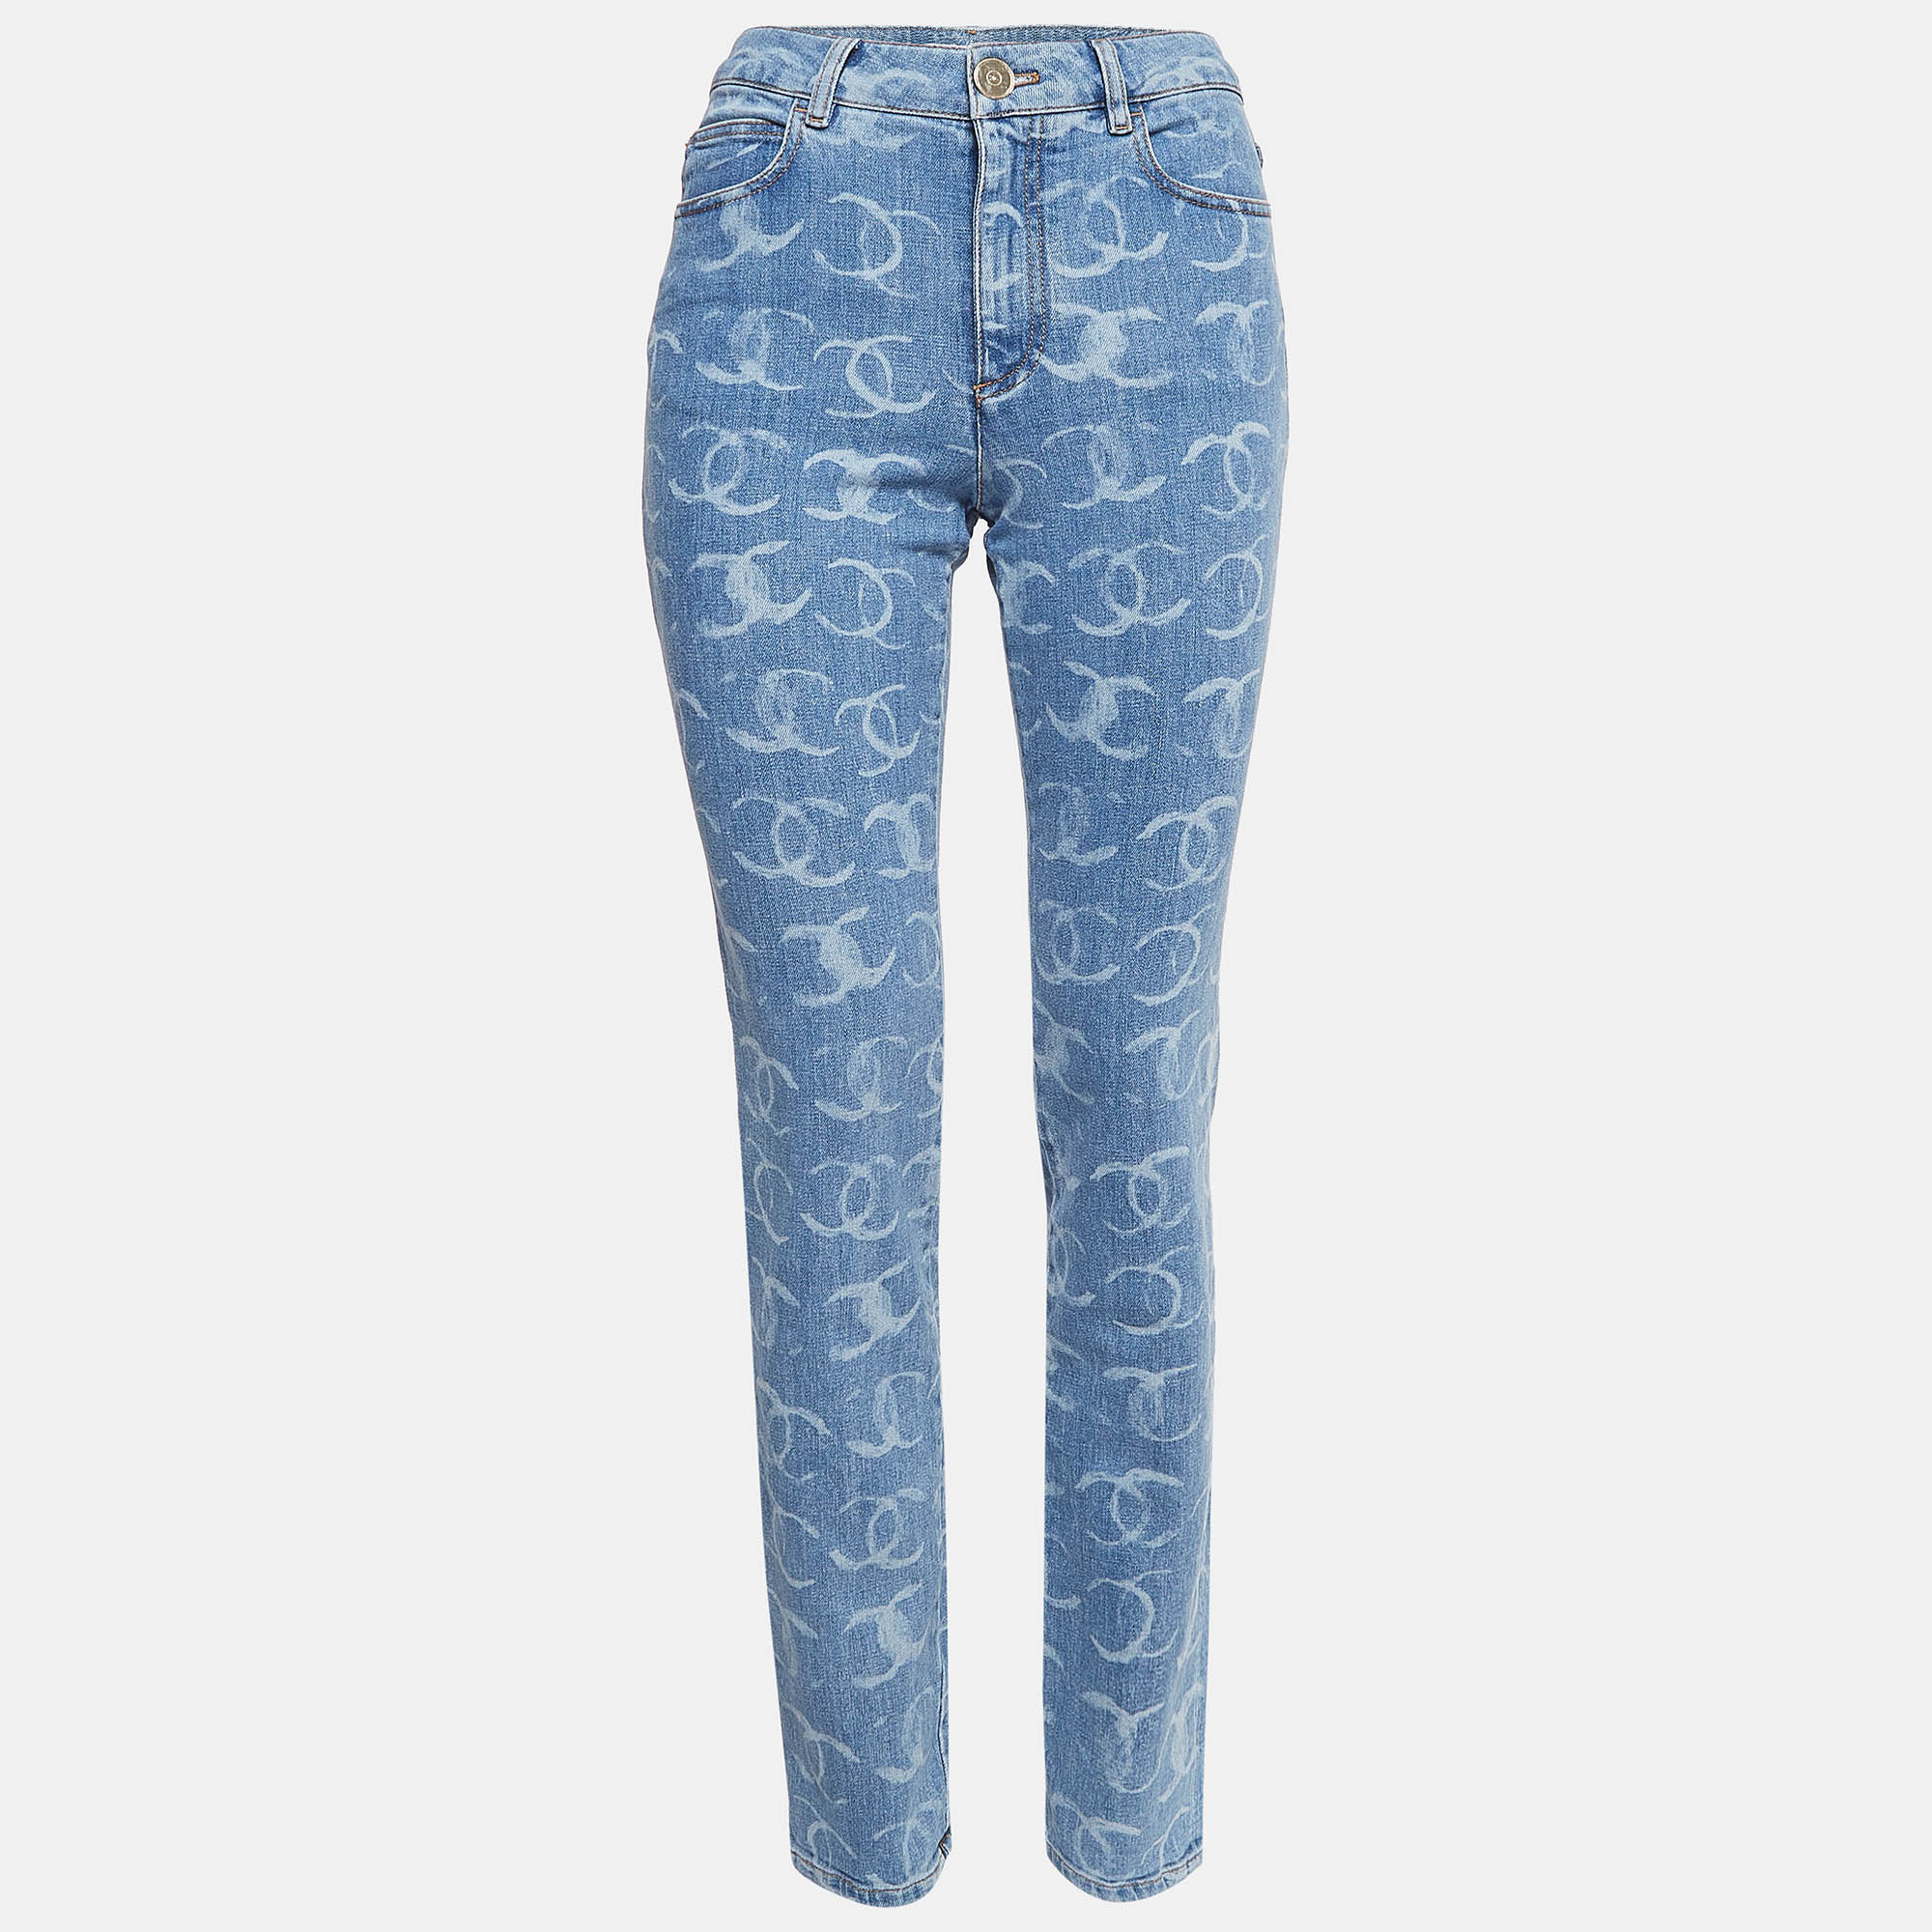 Chanel blue cc print denim embellished jeans s waist 28"